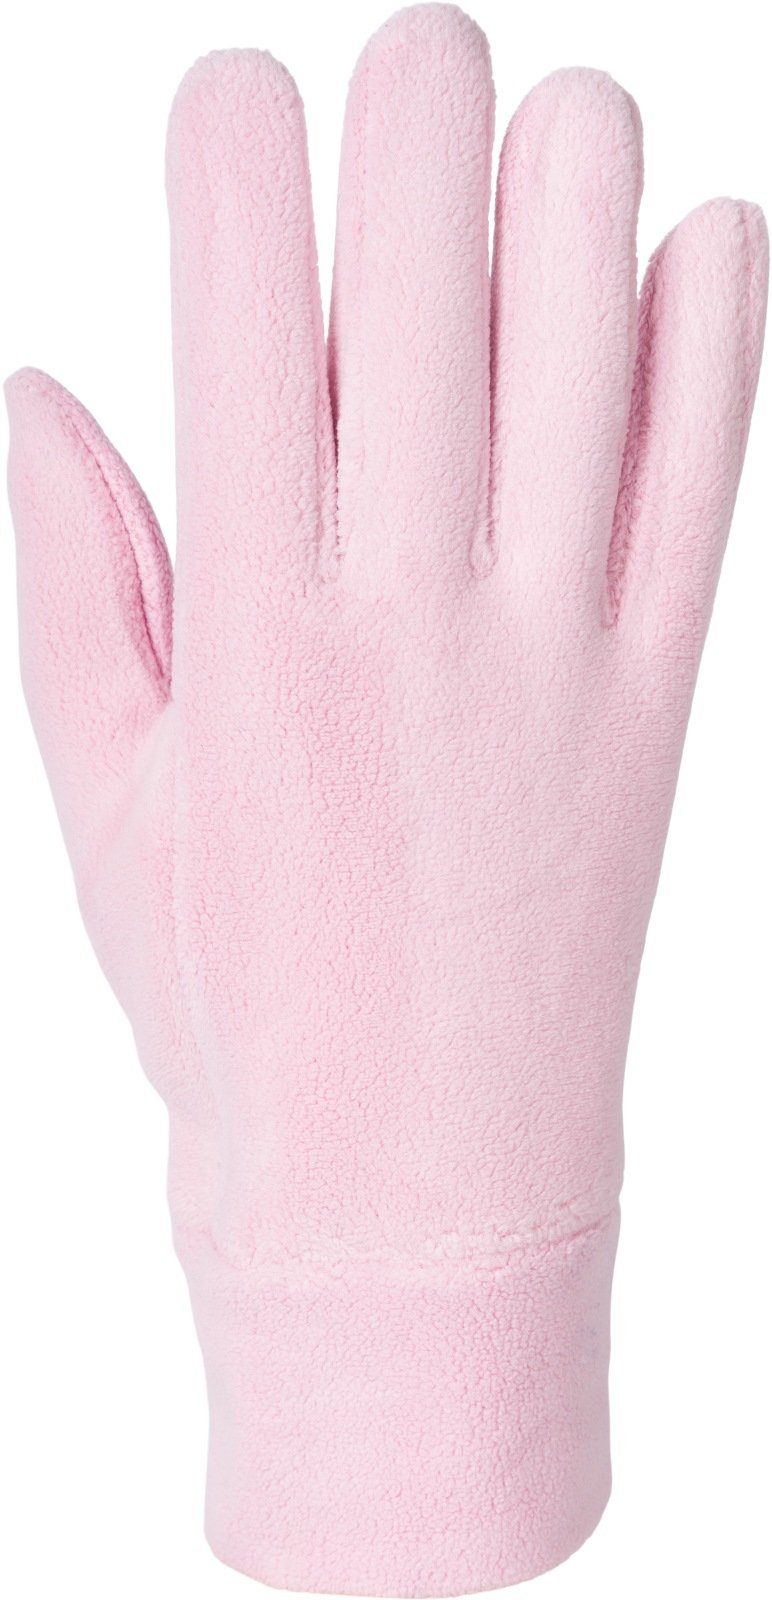 styleBREAKER Fleecehandschuhe Einfarbige Handschuhe Touchscreen Fleece Rose